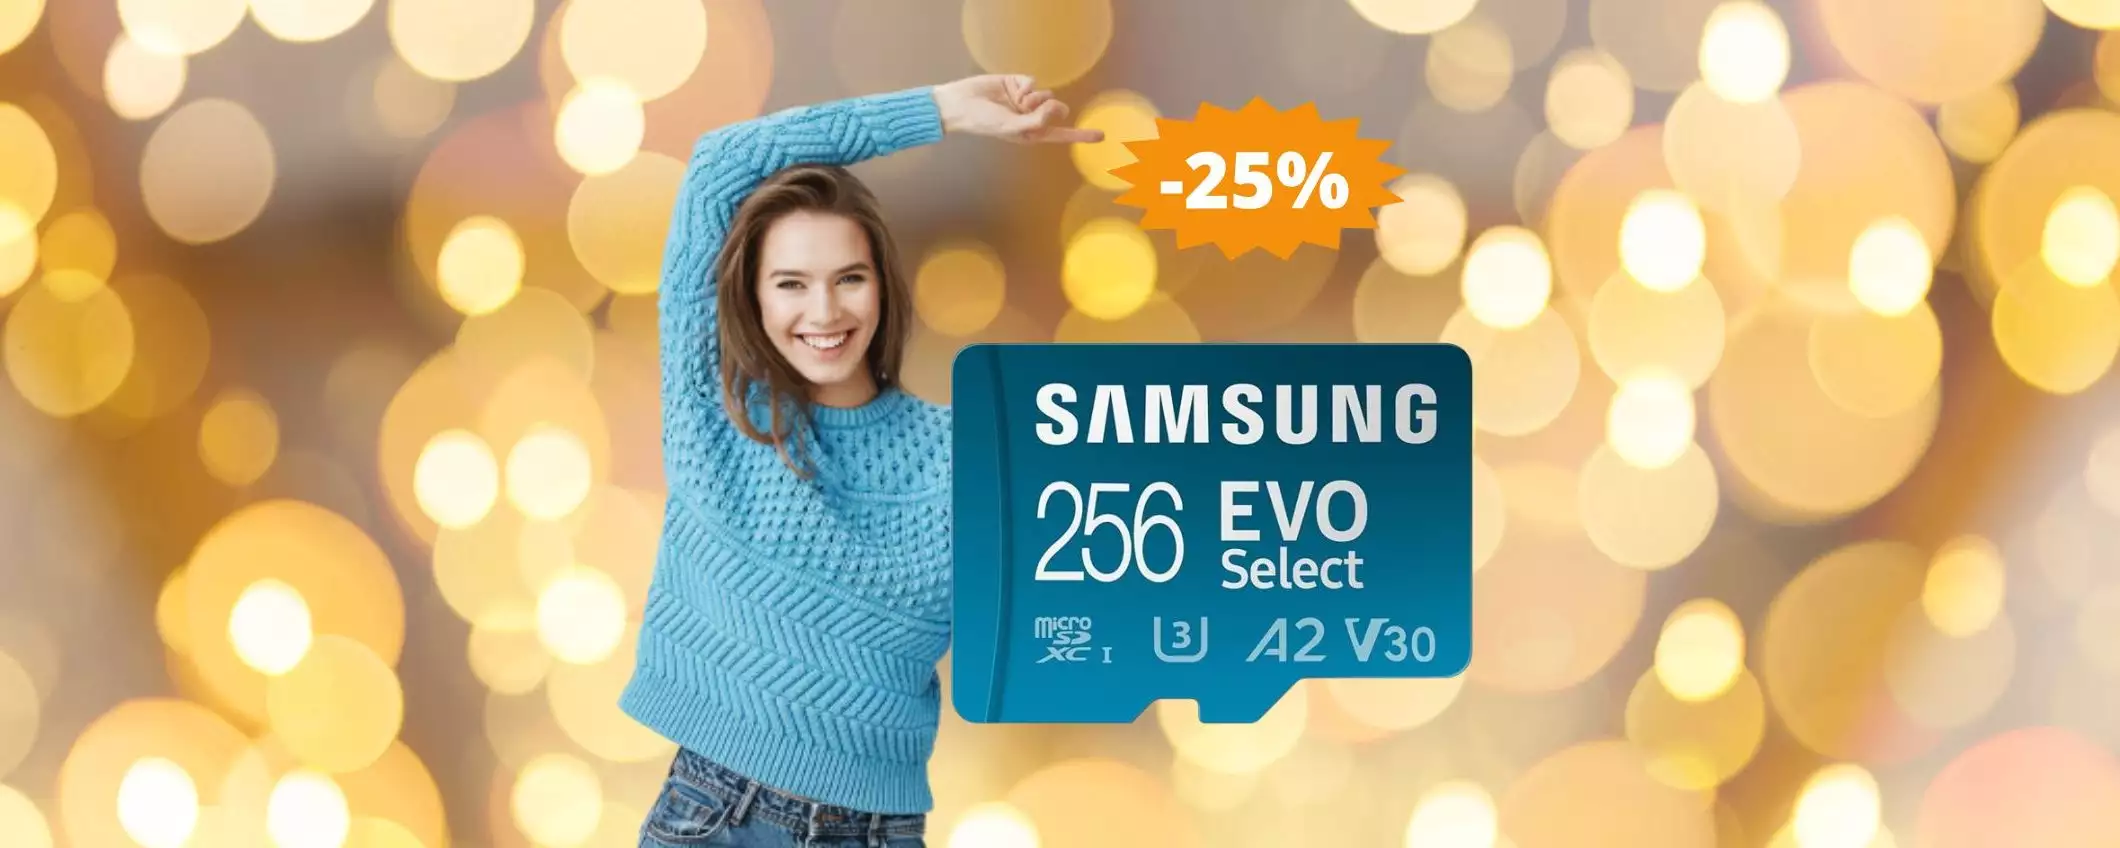 MicroSD Samsung Memorie EVO: sconto EPICO del 25%